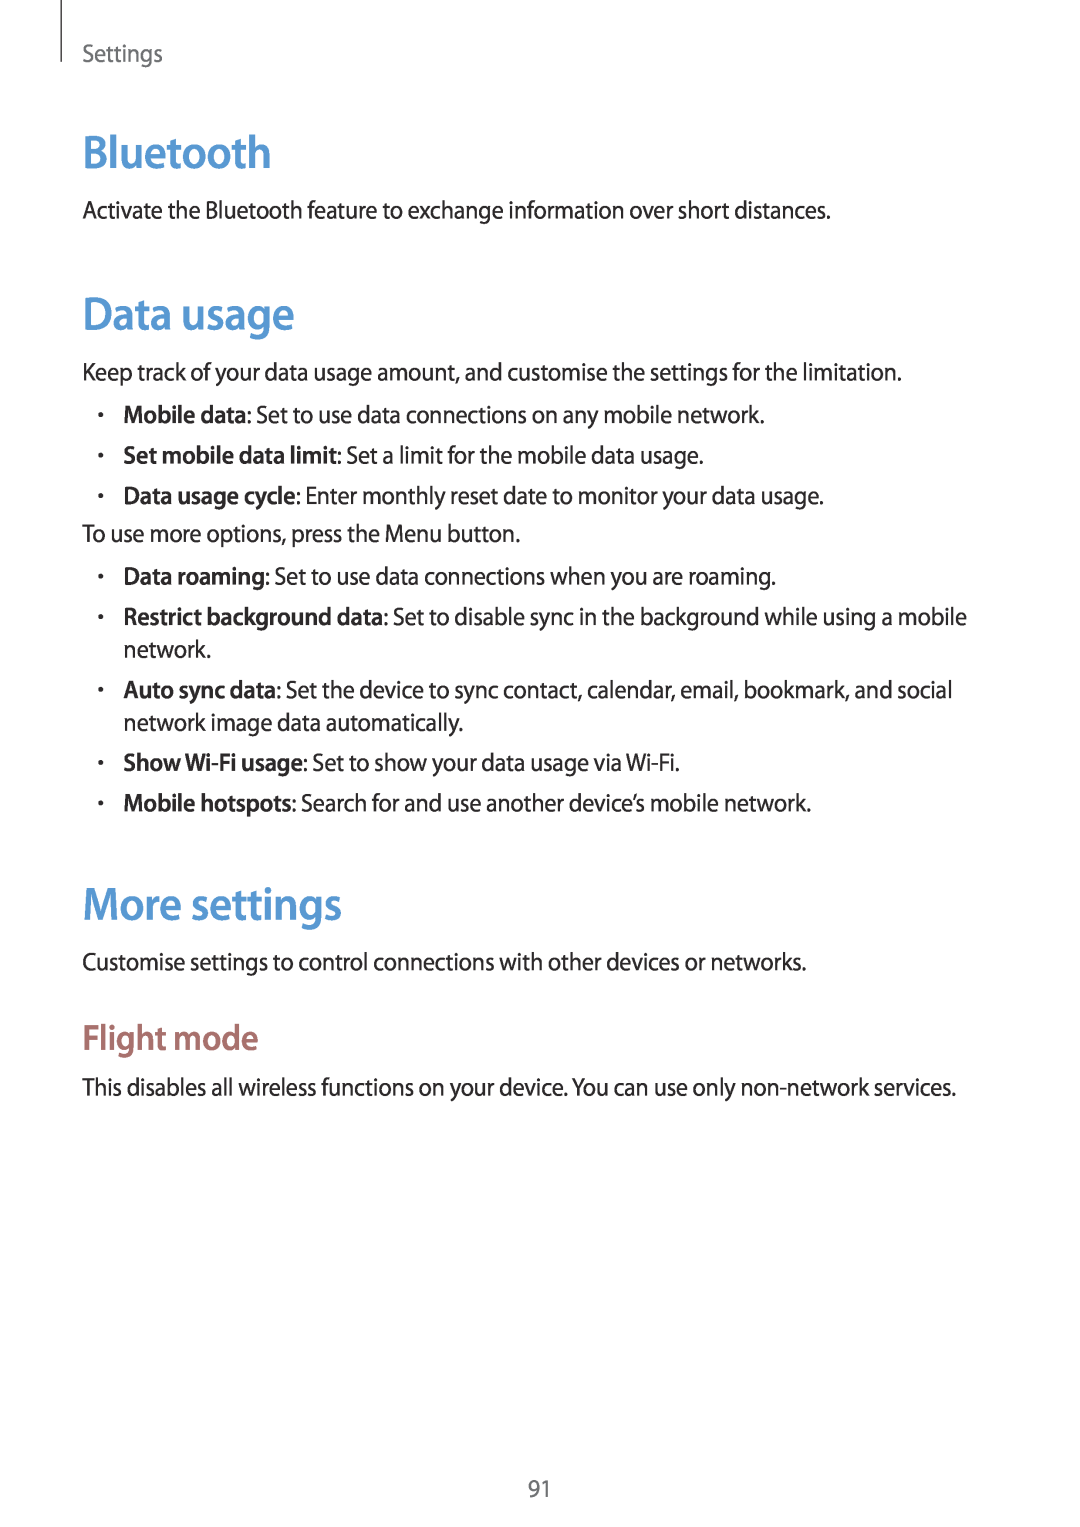 Samsung GT2S7710TAAVDH, GT-S7710KRADBT, GT2S7710TAADBT manual Data usage, More settings, Flight mode, Settings, Bluetooth 